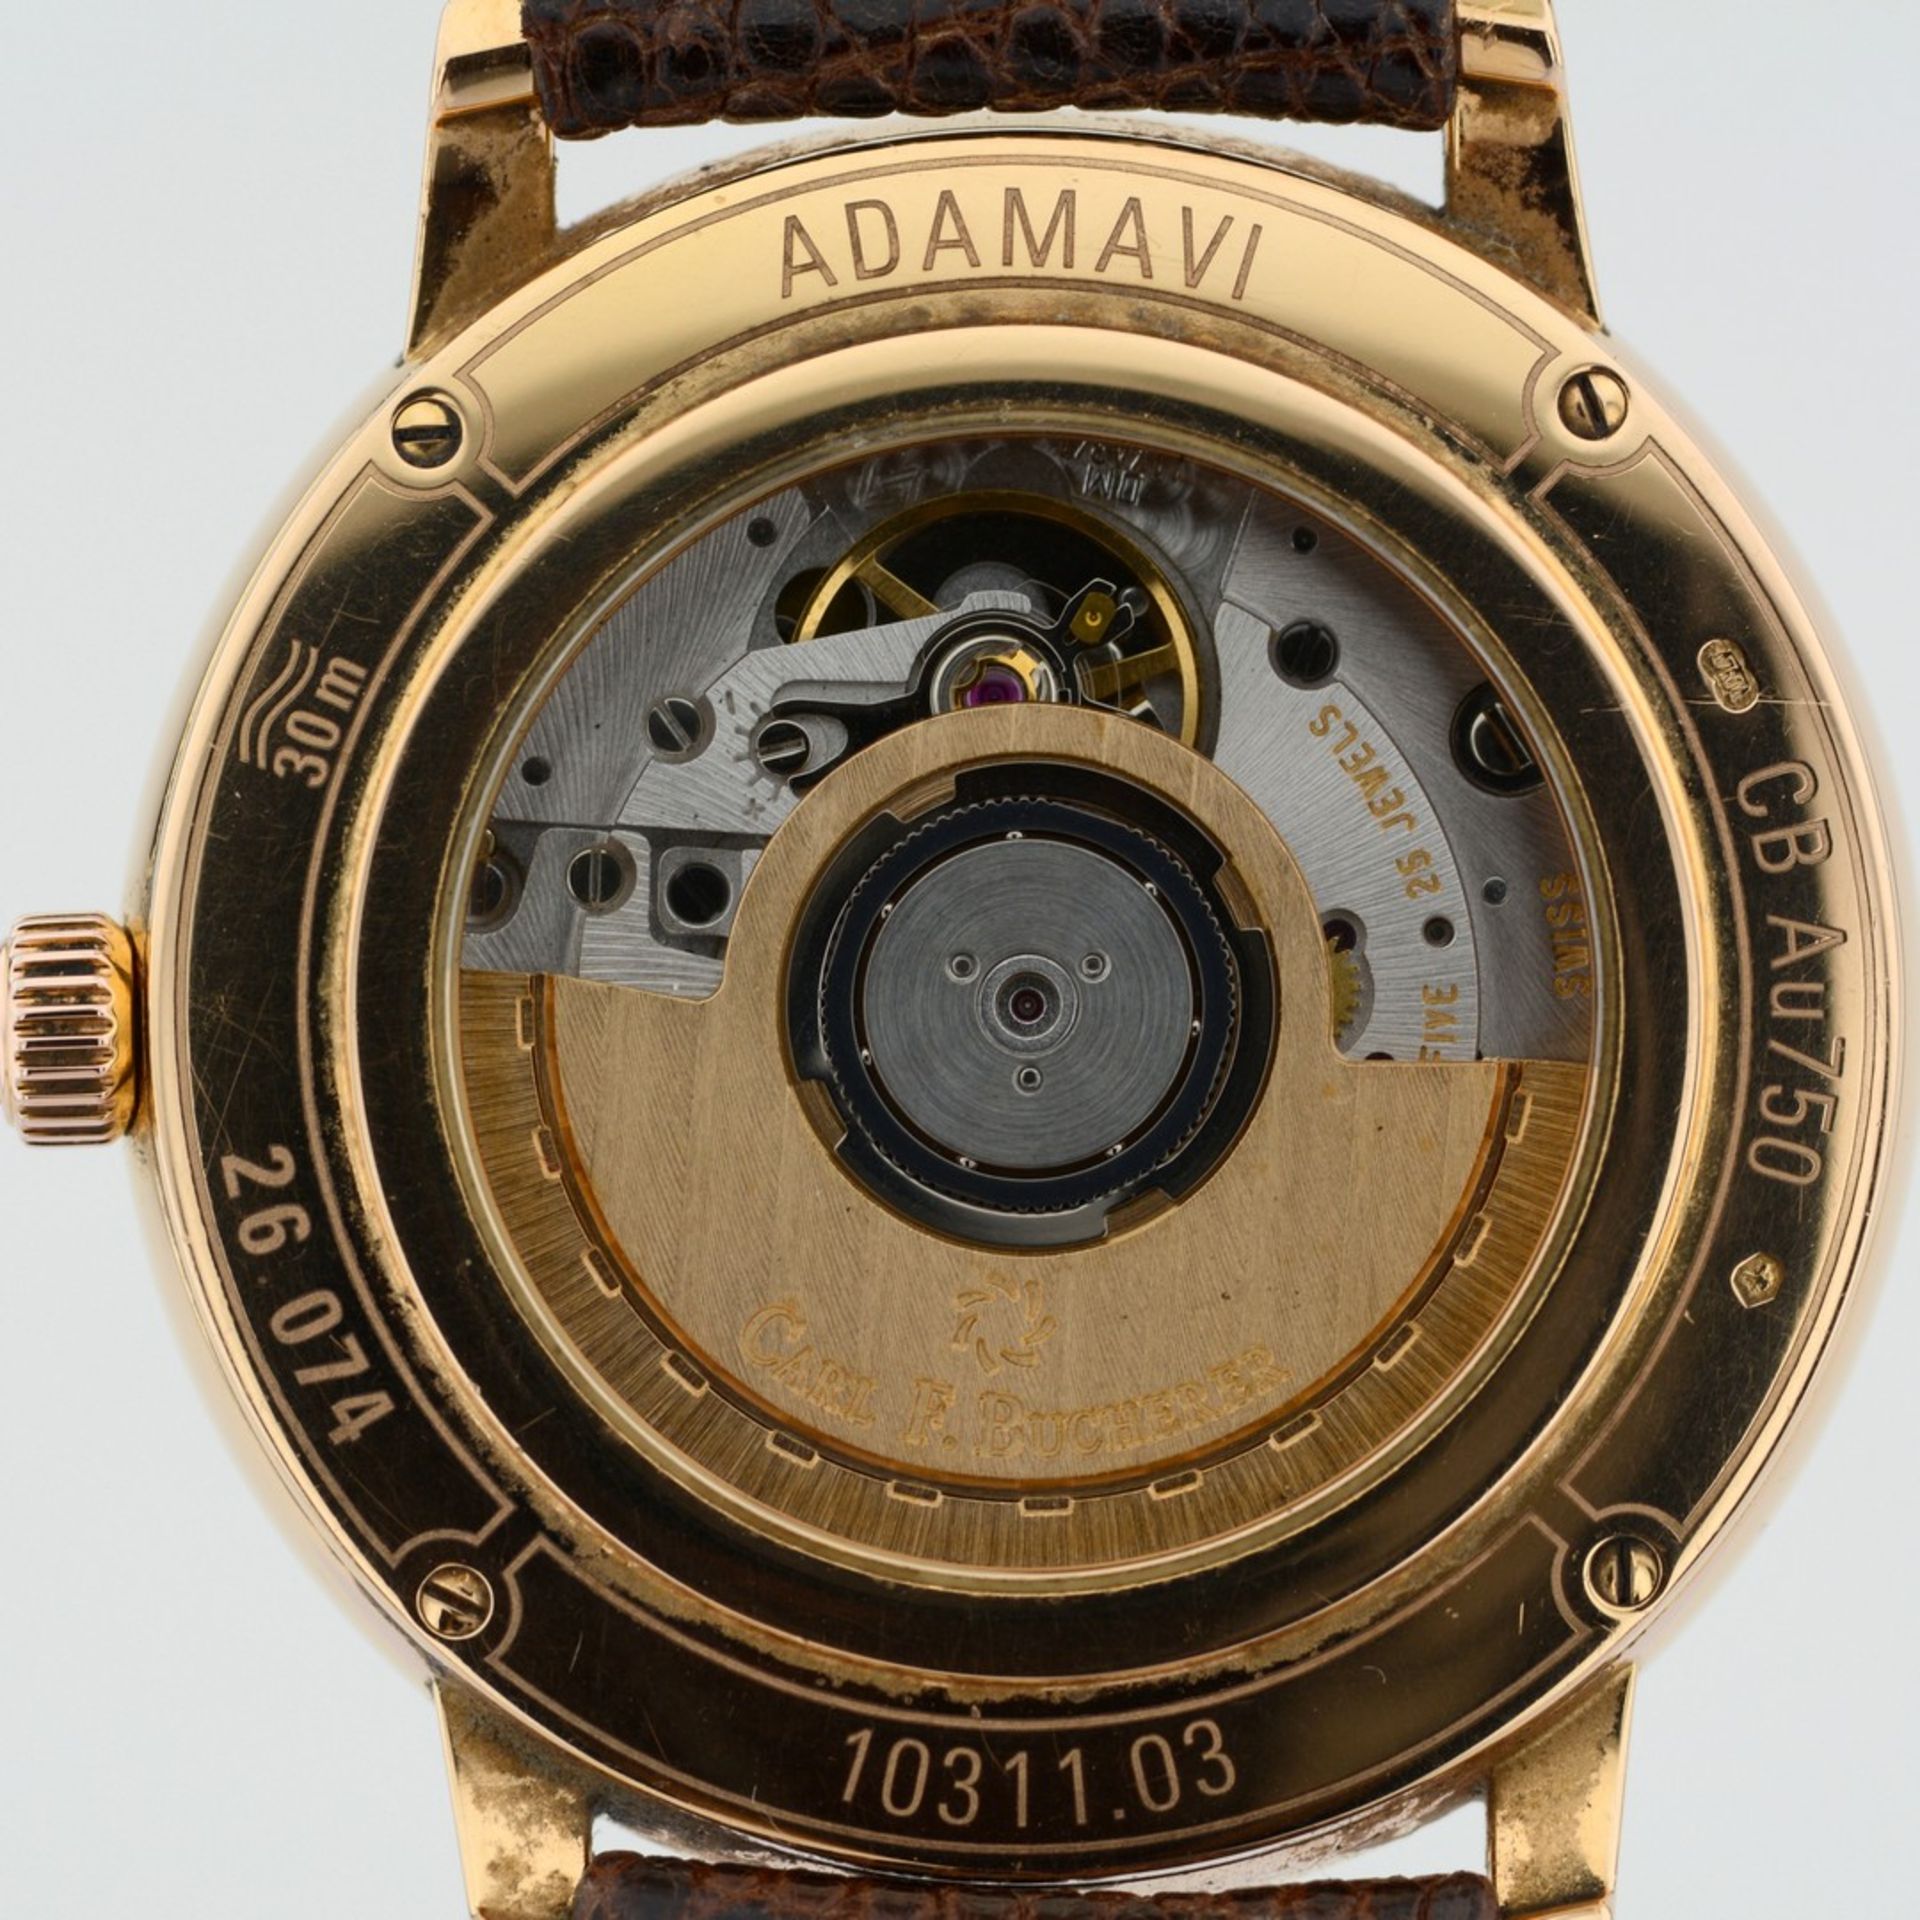 Carl F. Bucherer / Adamavi - 18K Yellow Gold Case - Automatic - Date - Gentlemen's Pink Gold Wrist.. - Image 4 of 7